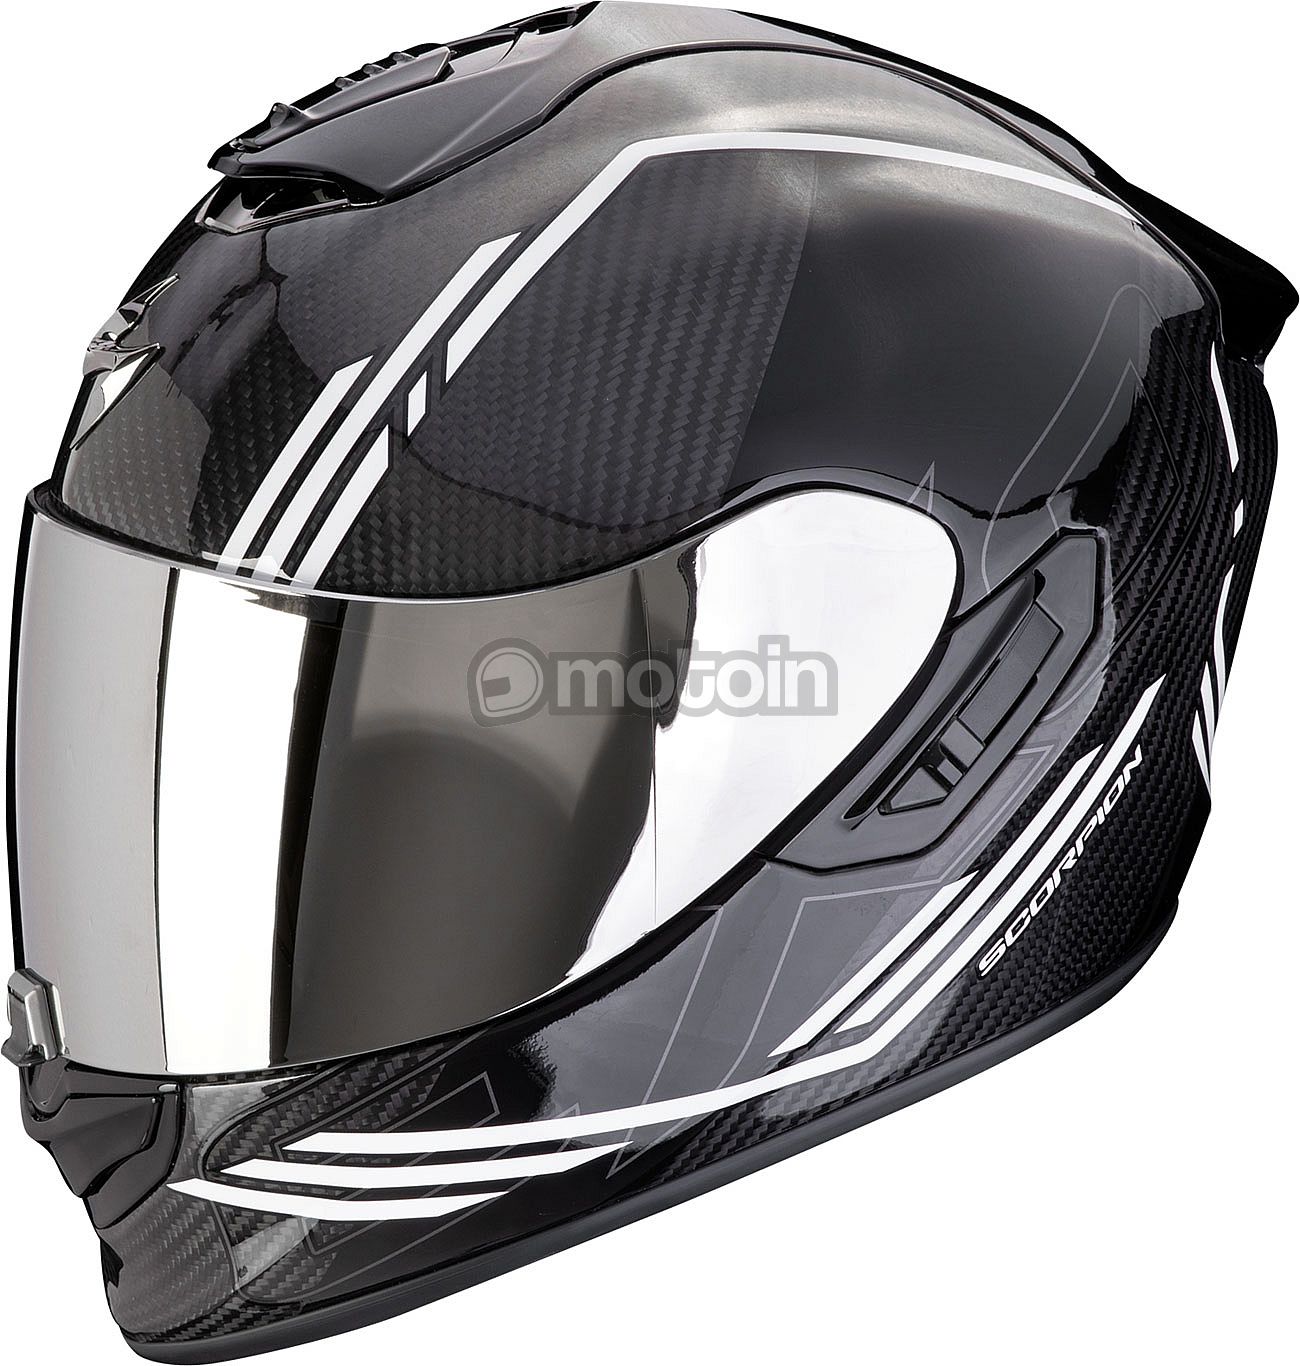 Scorpion EXO-1400 Evo Air II Carbon Reika, full face helmet